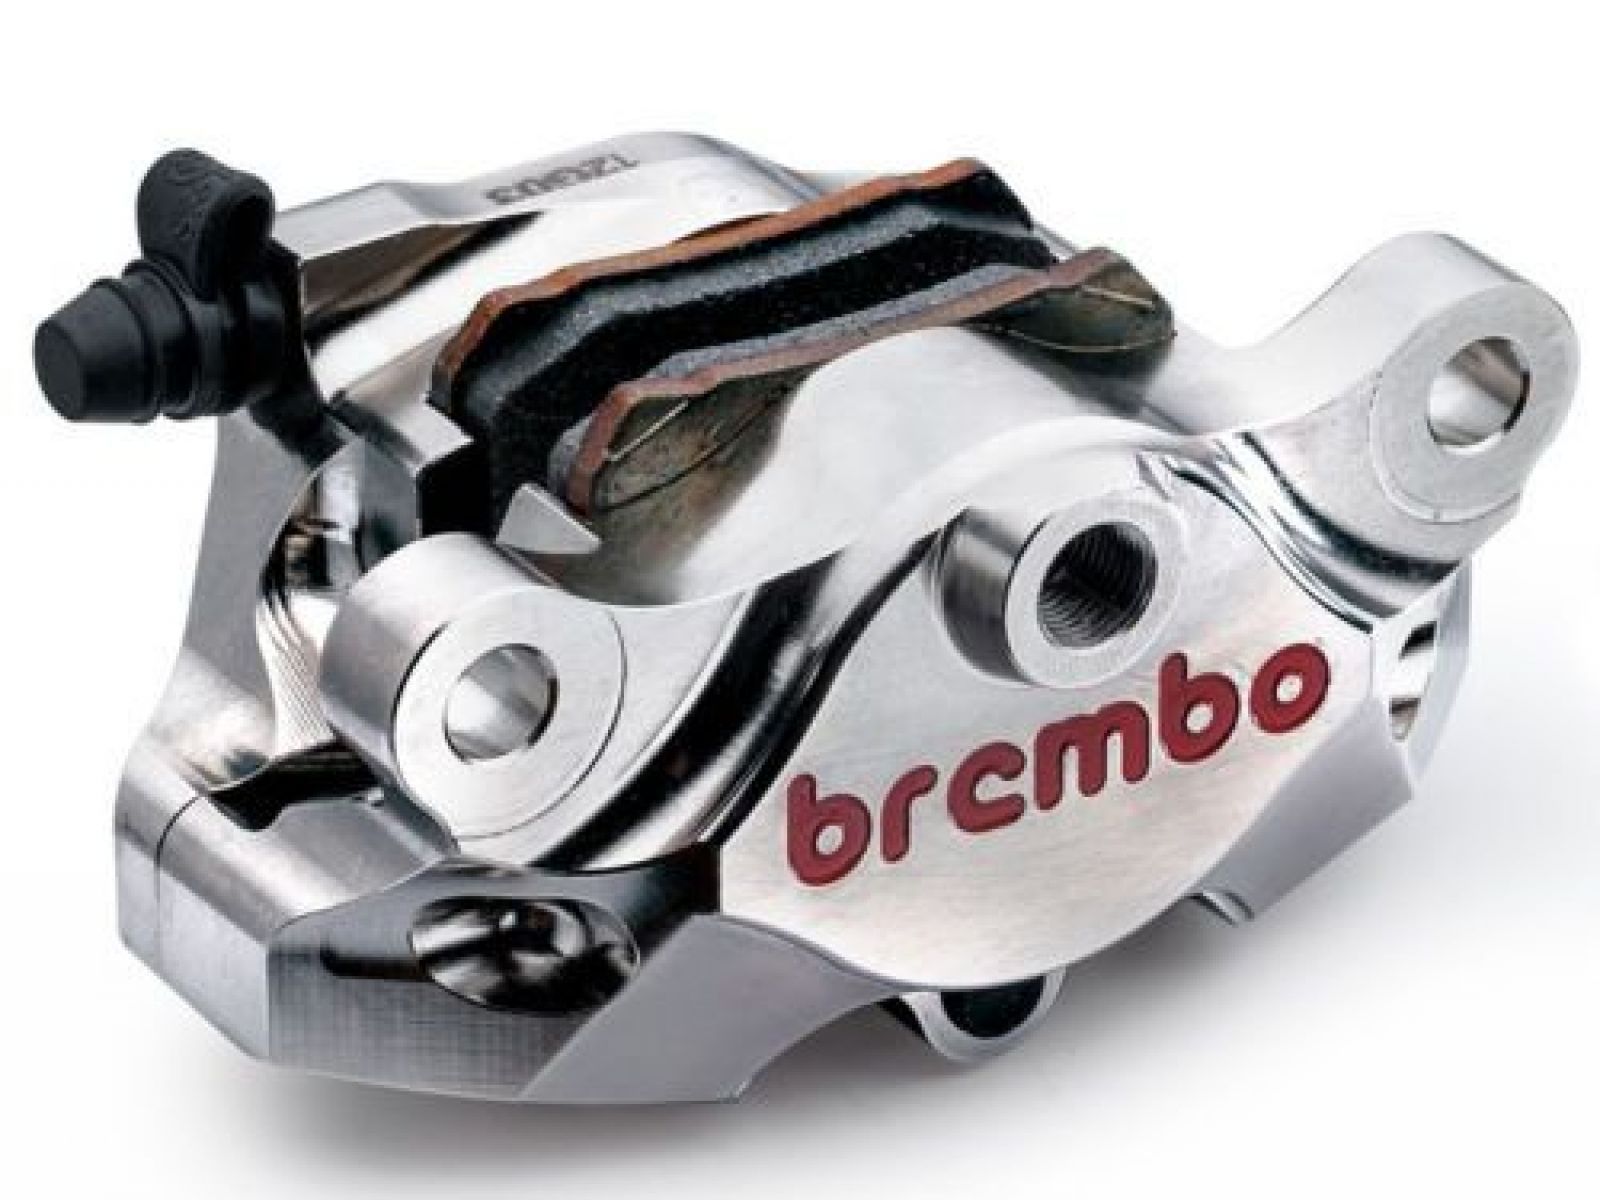 Суппорт тормозной задний Brembo для Ducati Streetfighter 848 12-15